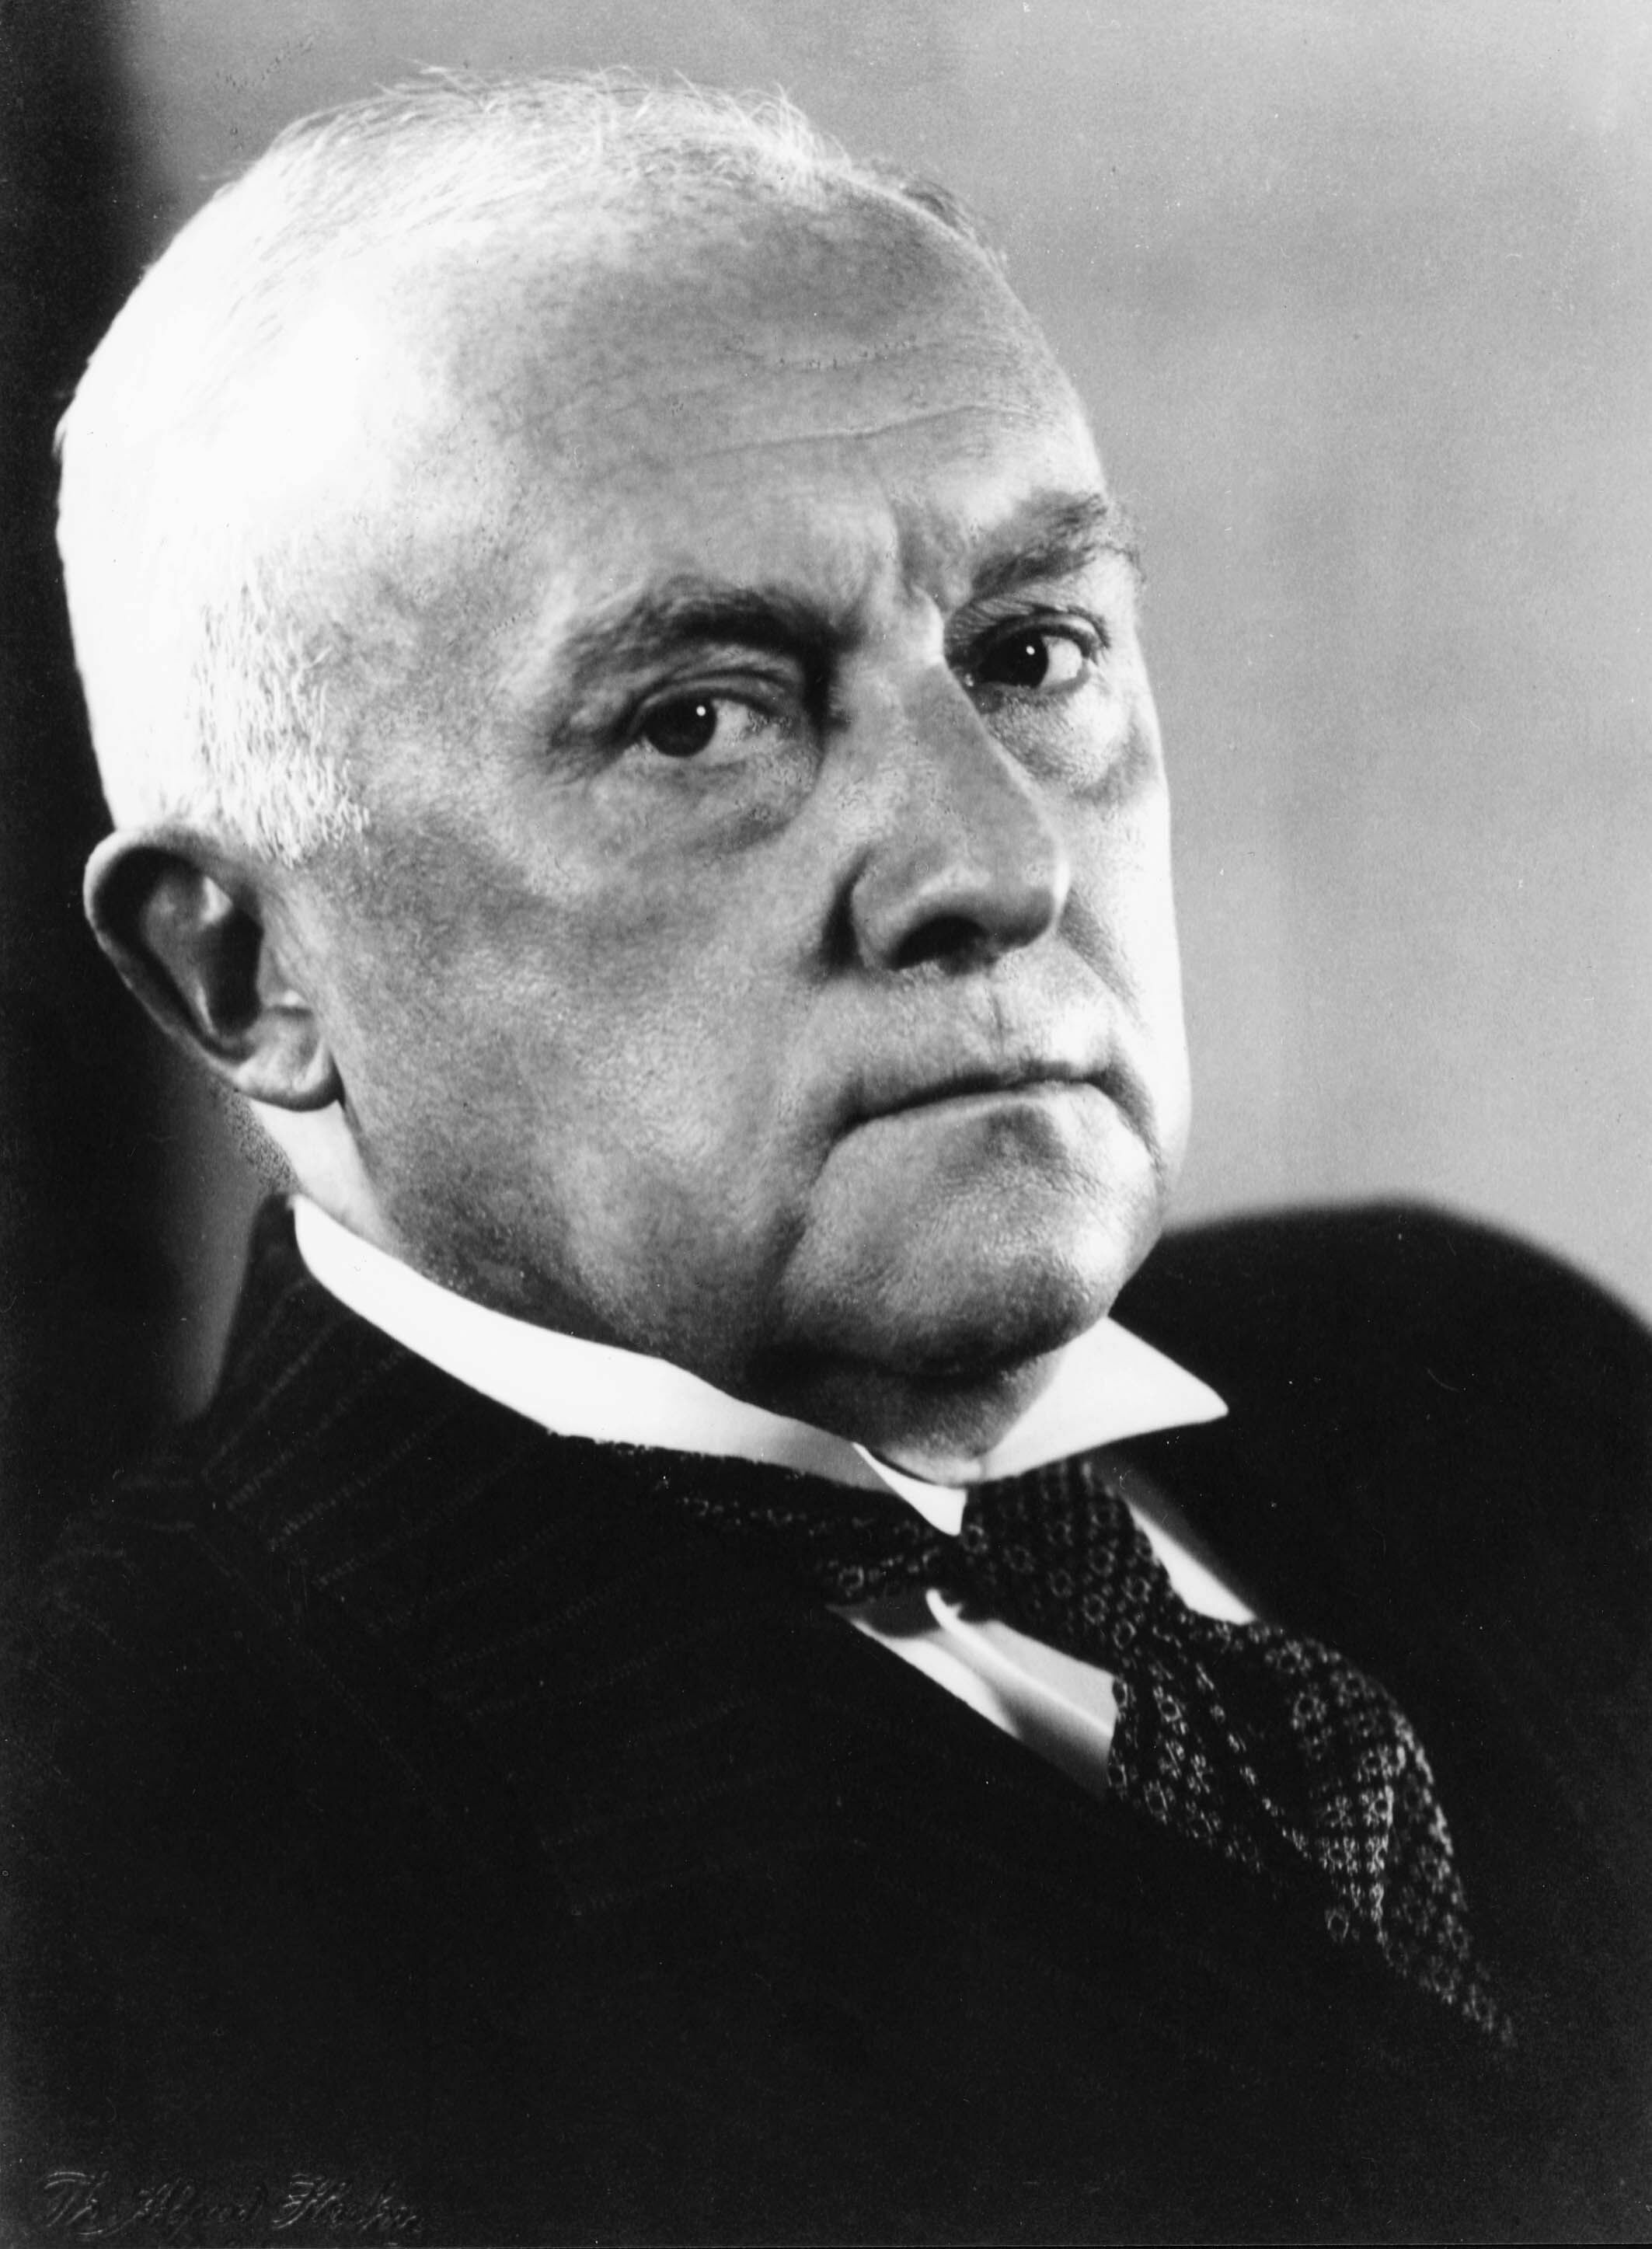 DKW founder Jörgen Sakfte Rasmussen (1878 - 1964)